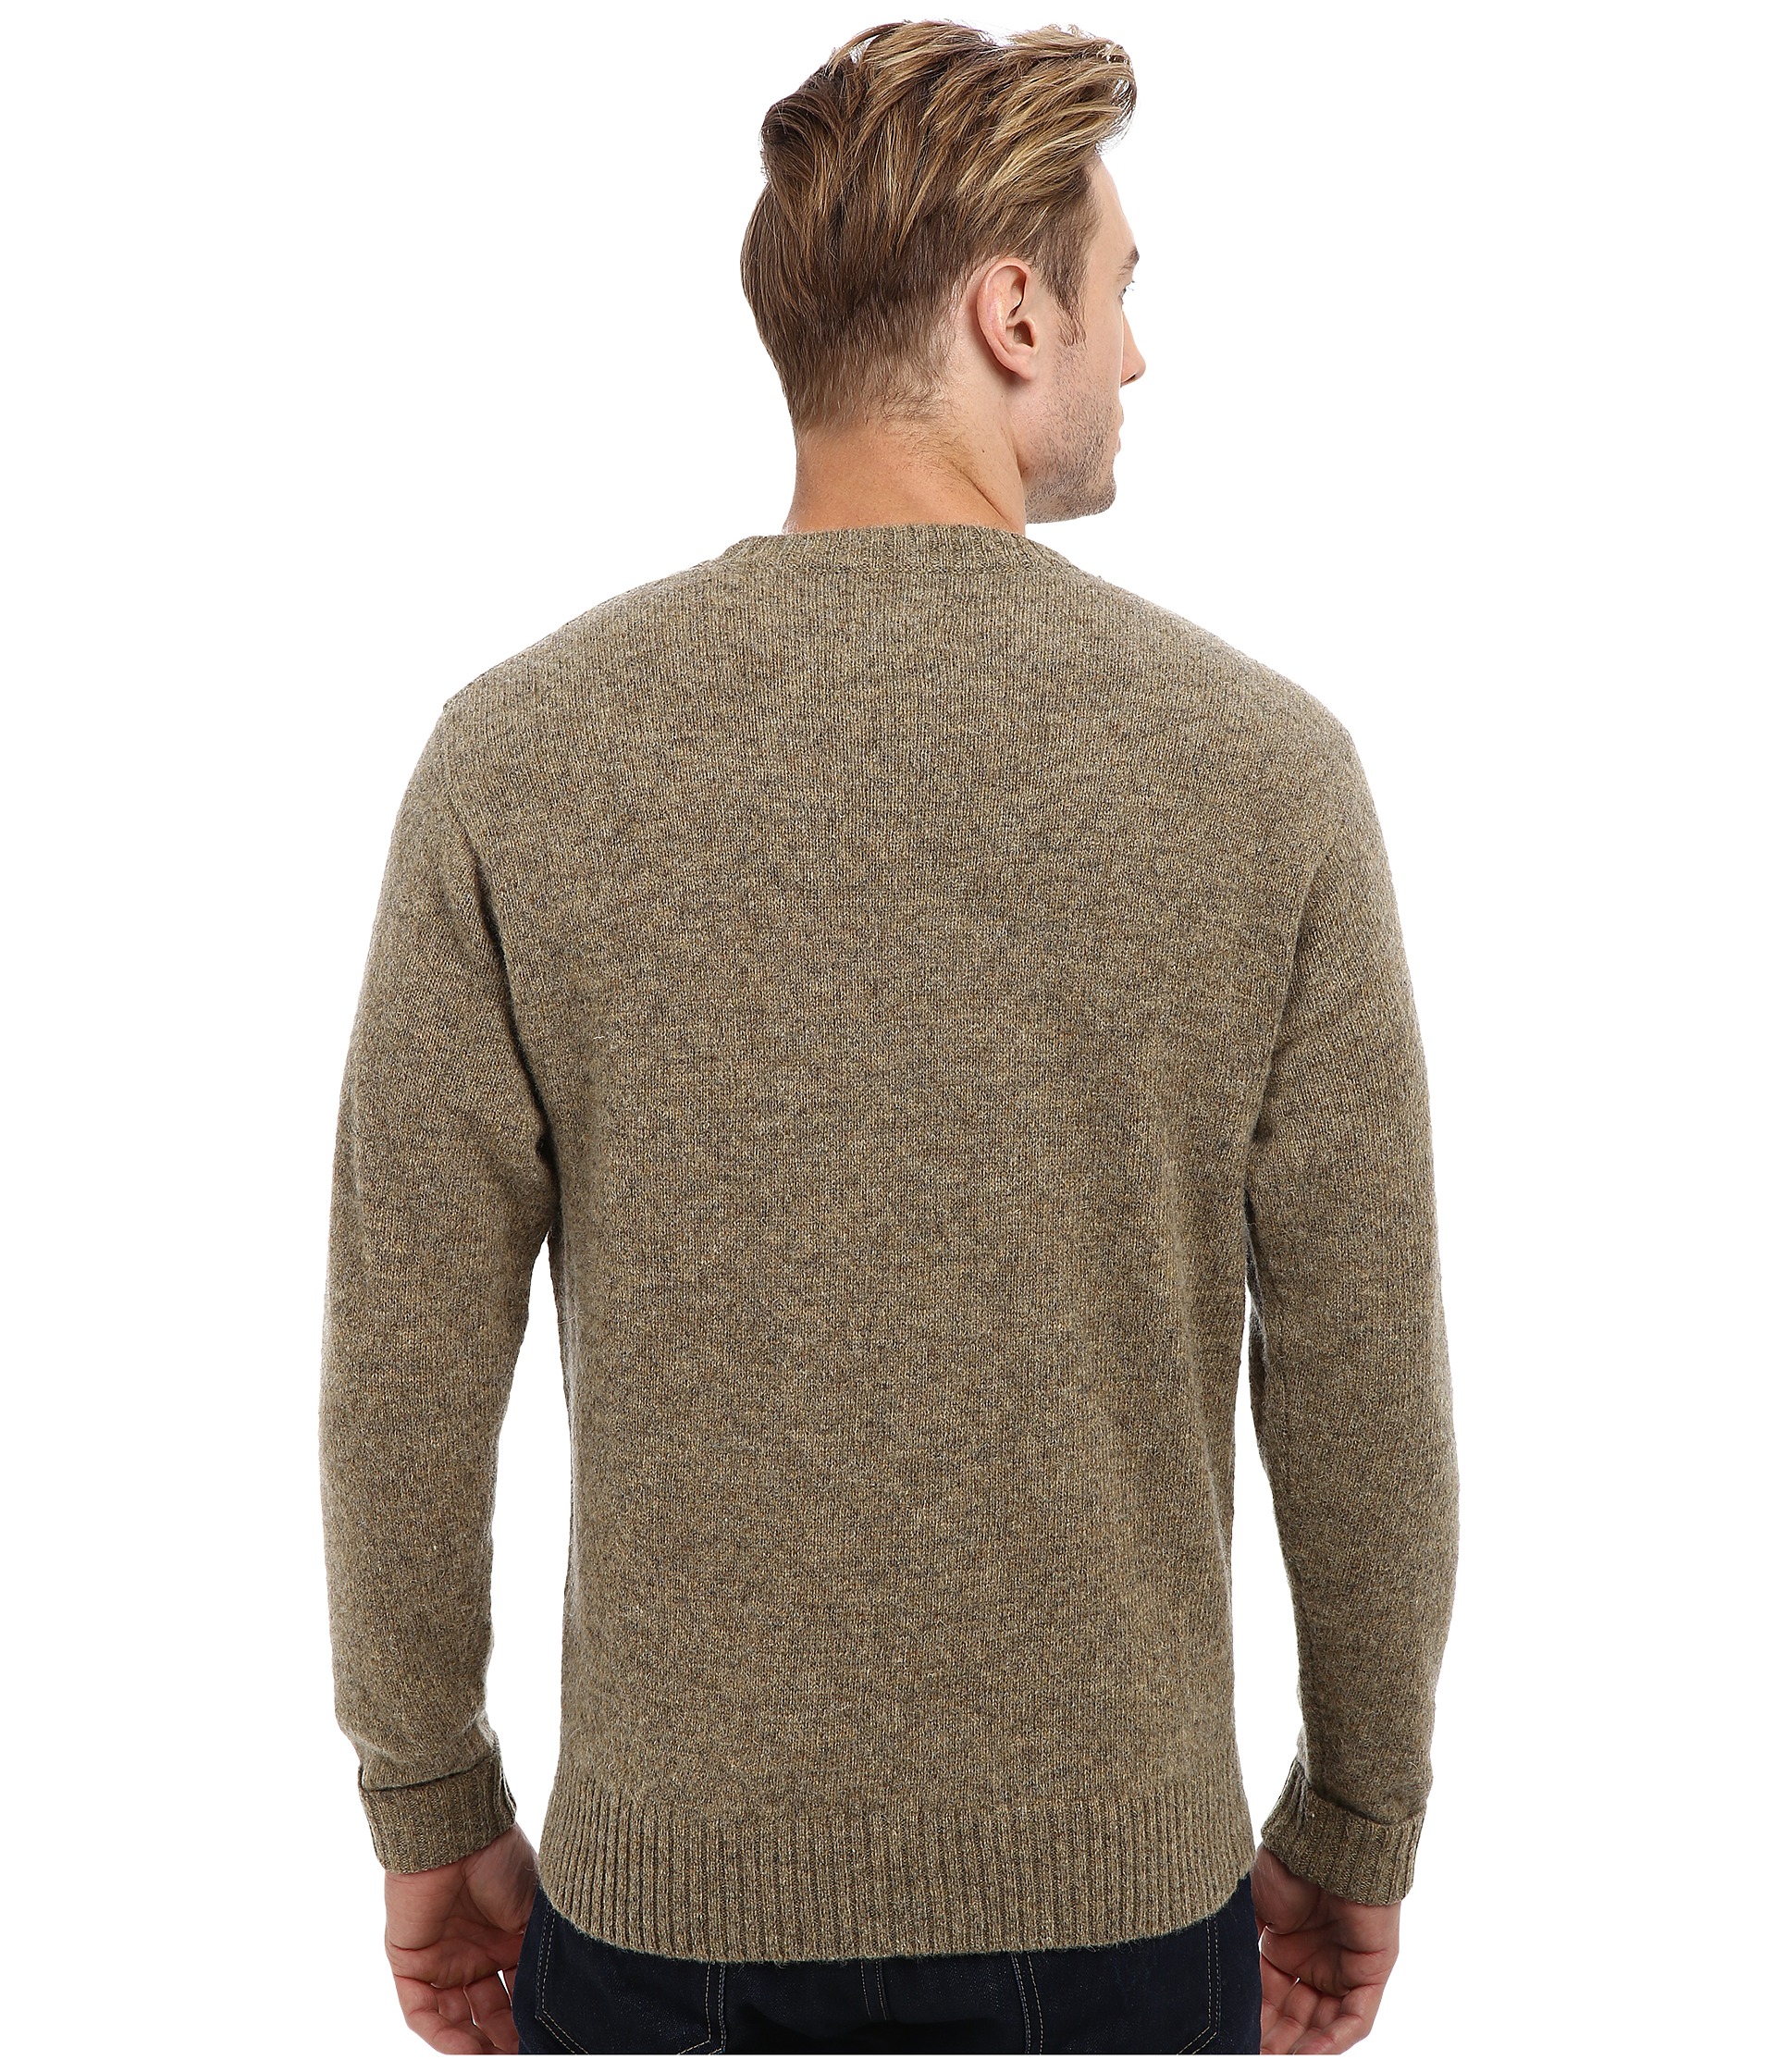 Pendleton Shetland Crew Sweater, Clothing | Shipped Free at Zappos